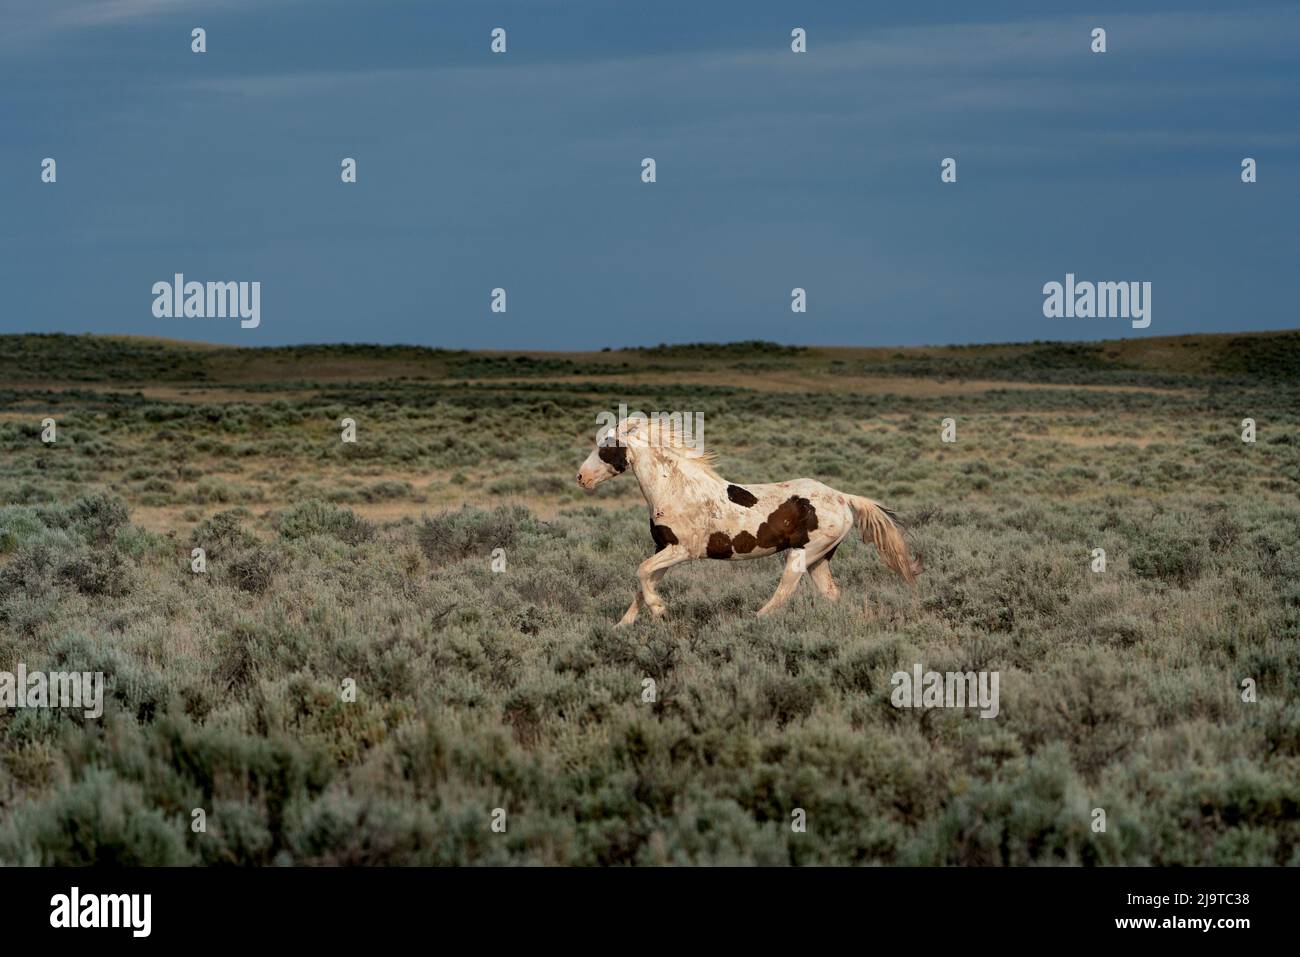 USA, Wyoming. Wild horse stallion running across desert sage. Stock Photo